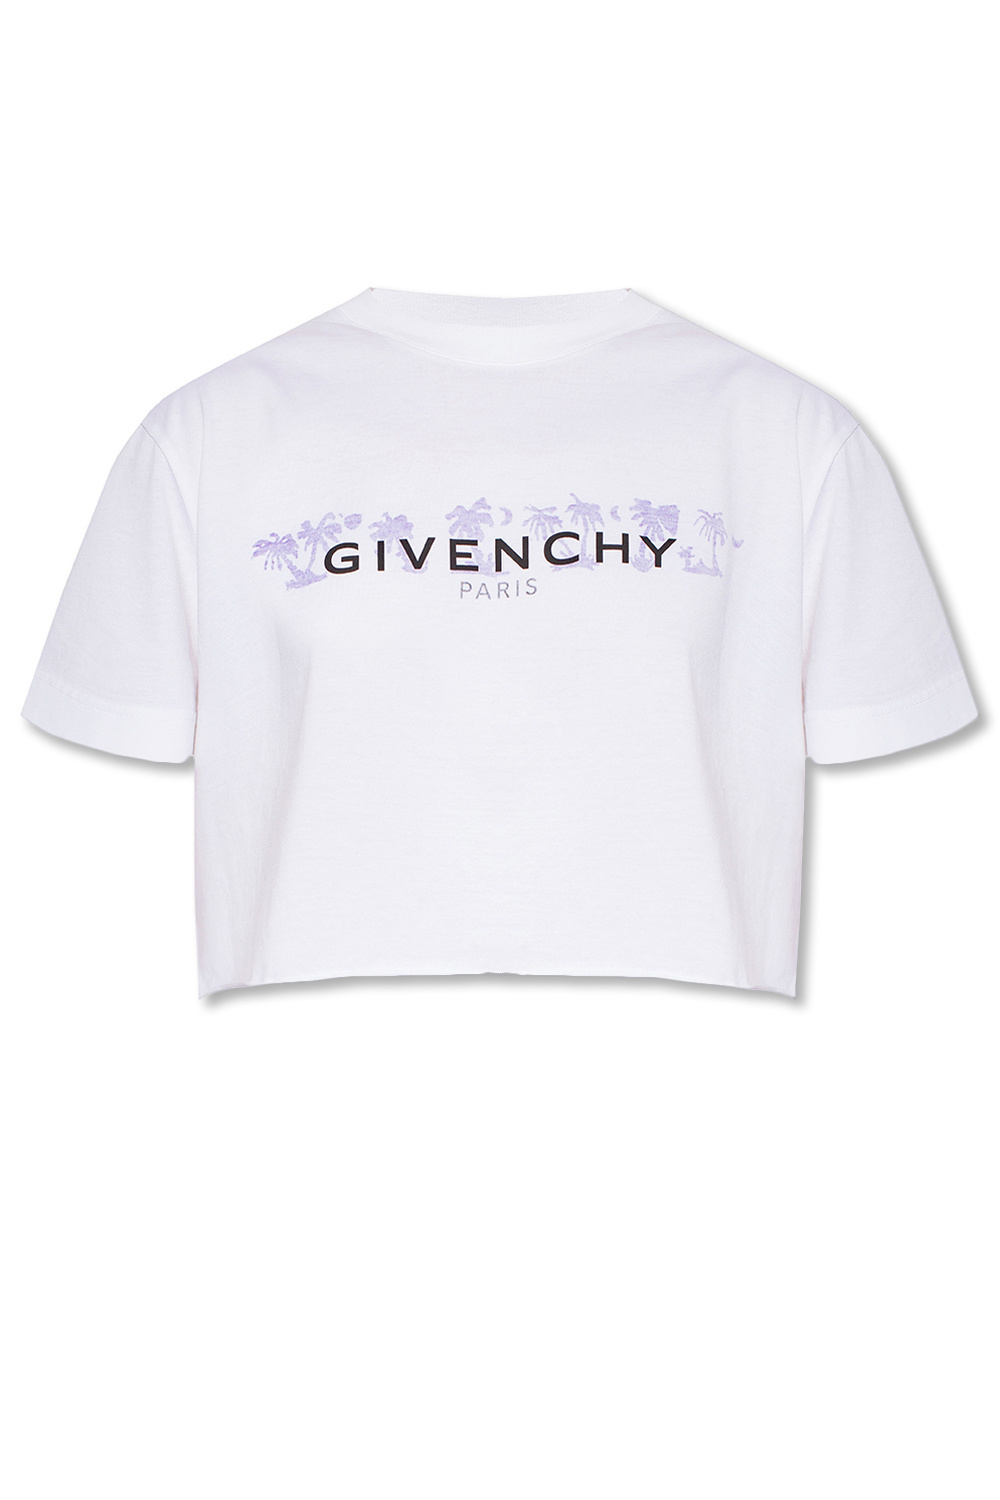 Givenchy Black Josh Smith Edition Logo T-Shirt for Men